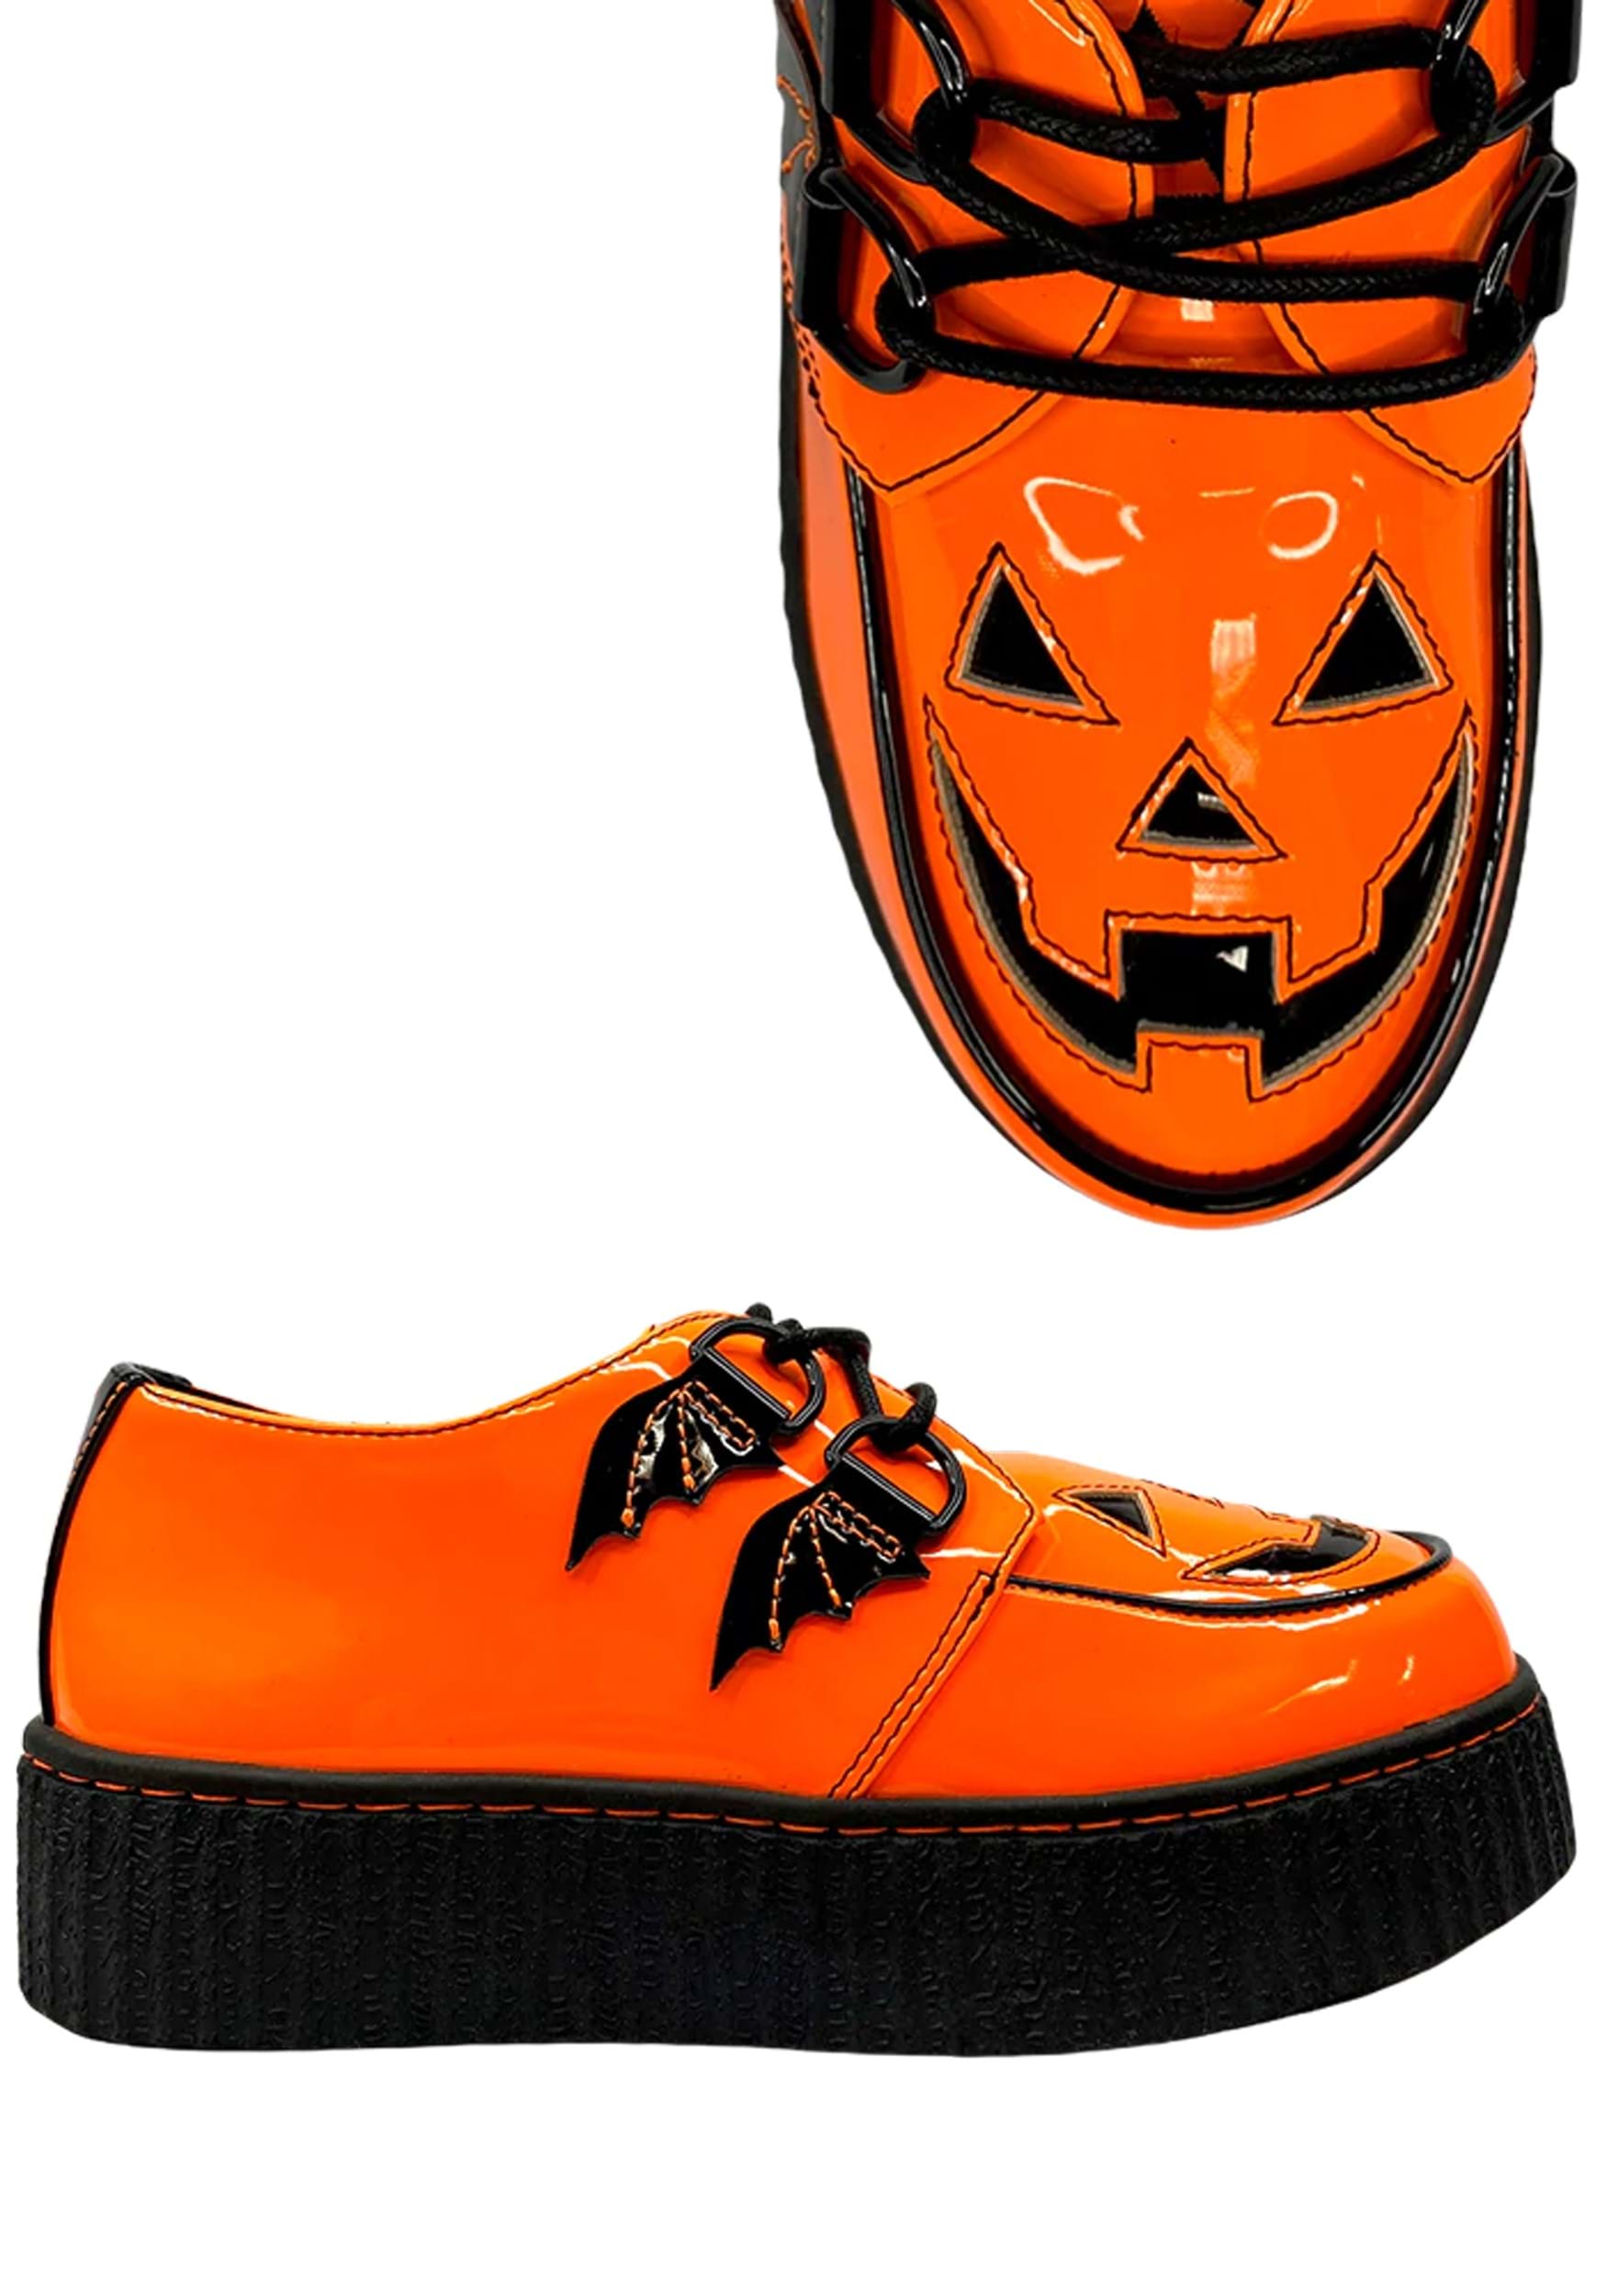 Image of Patent Orange Jack O' Lantern Creeper Shoes ID SVKRYPTJACK-OR/BK-8